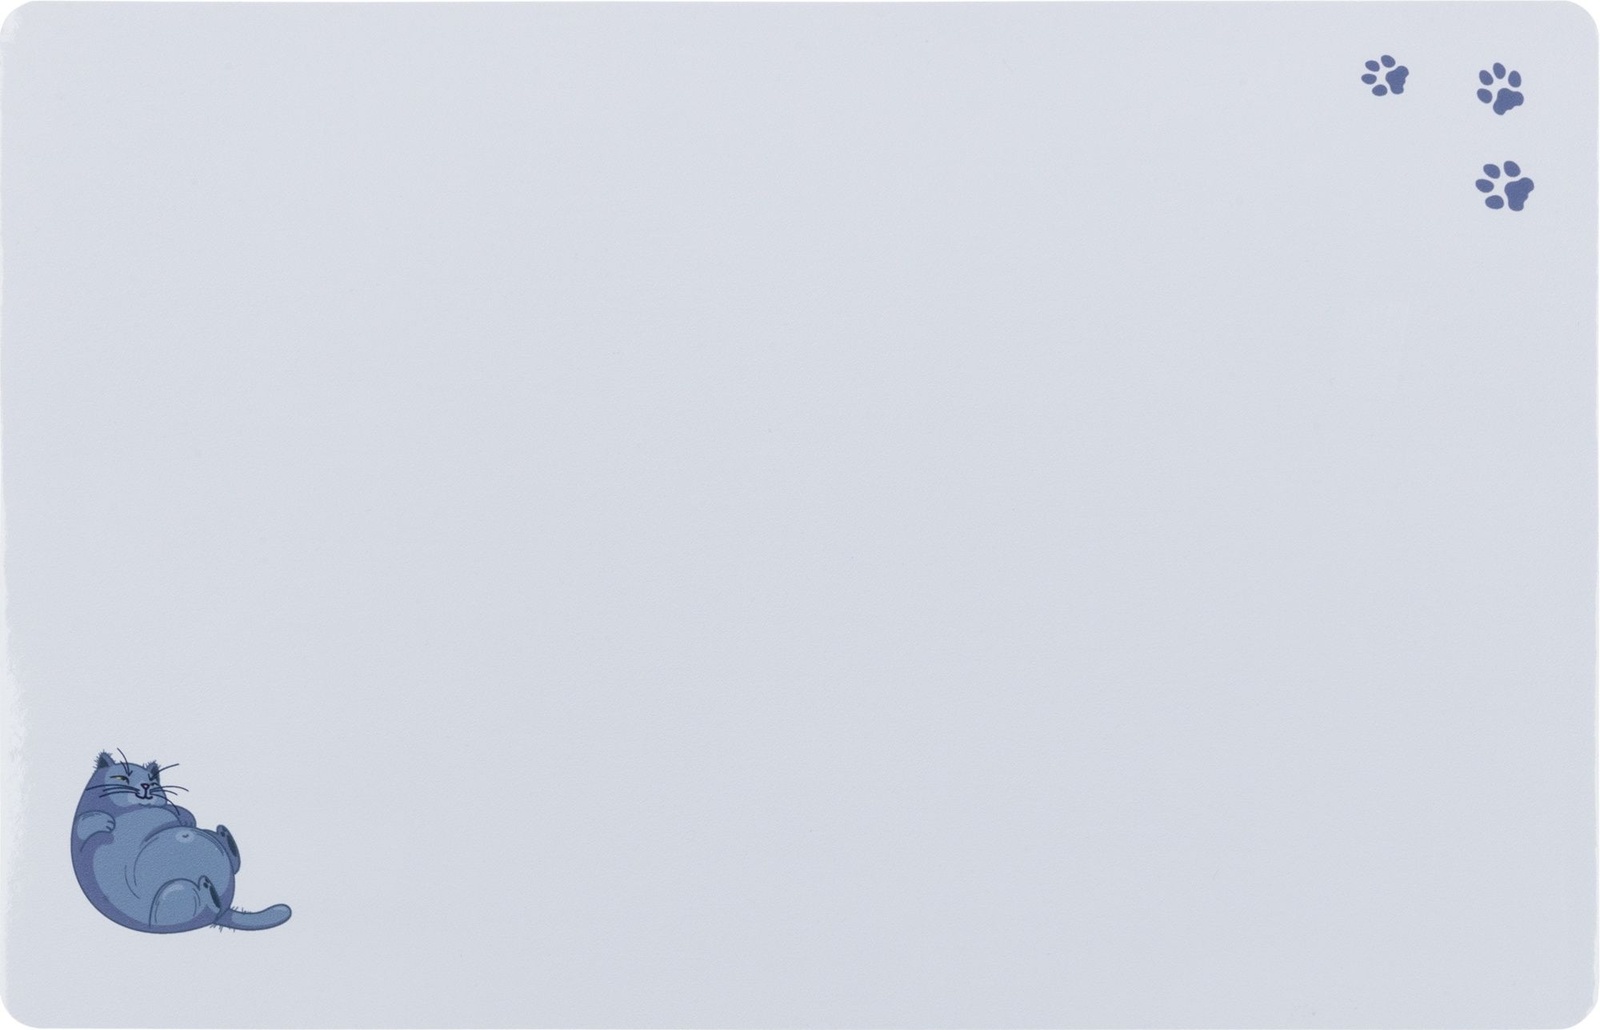 Trixie Trixie коврик под миску с рисунком Толстый кот/лапки, 44 x 28 см, серый (80 г) коврик для мисок trixie 24579 44х28 см серый 1 44 см 28 см